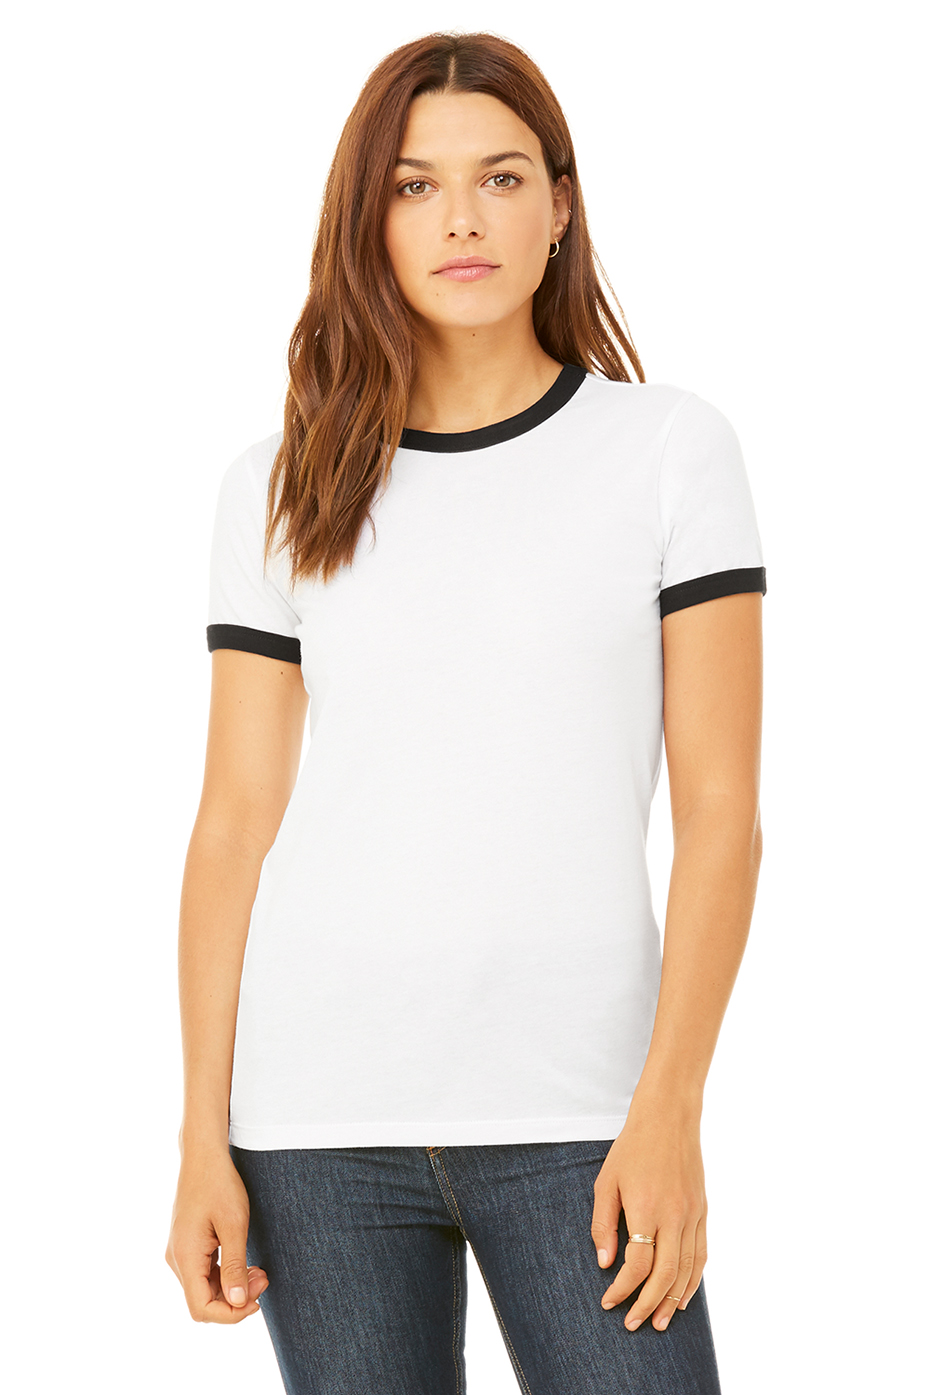 Womens Jersey T Shirts | Ringer Tee 